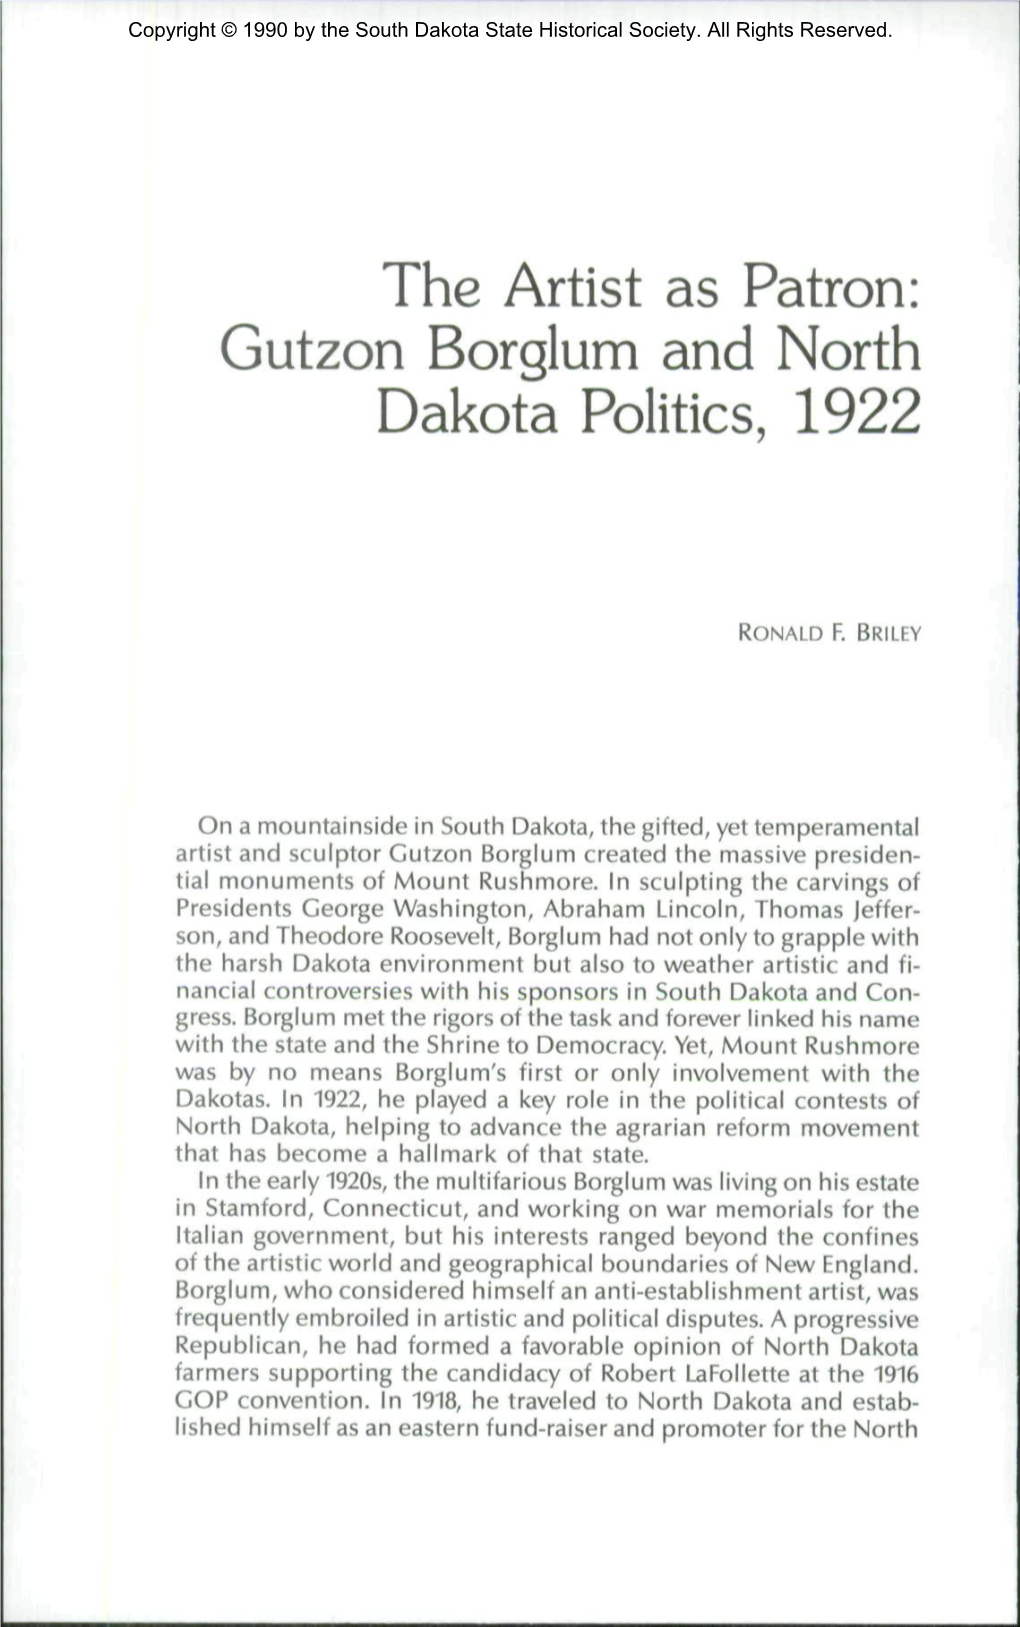 The Artist As Patron: Gutzon Borglum and North Dakota Politics, 1922